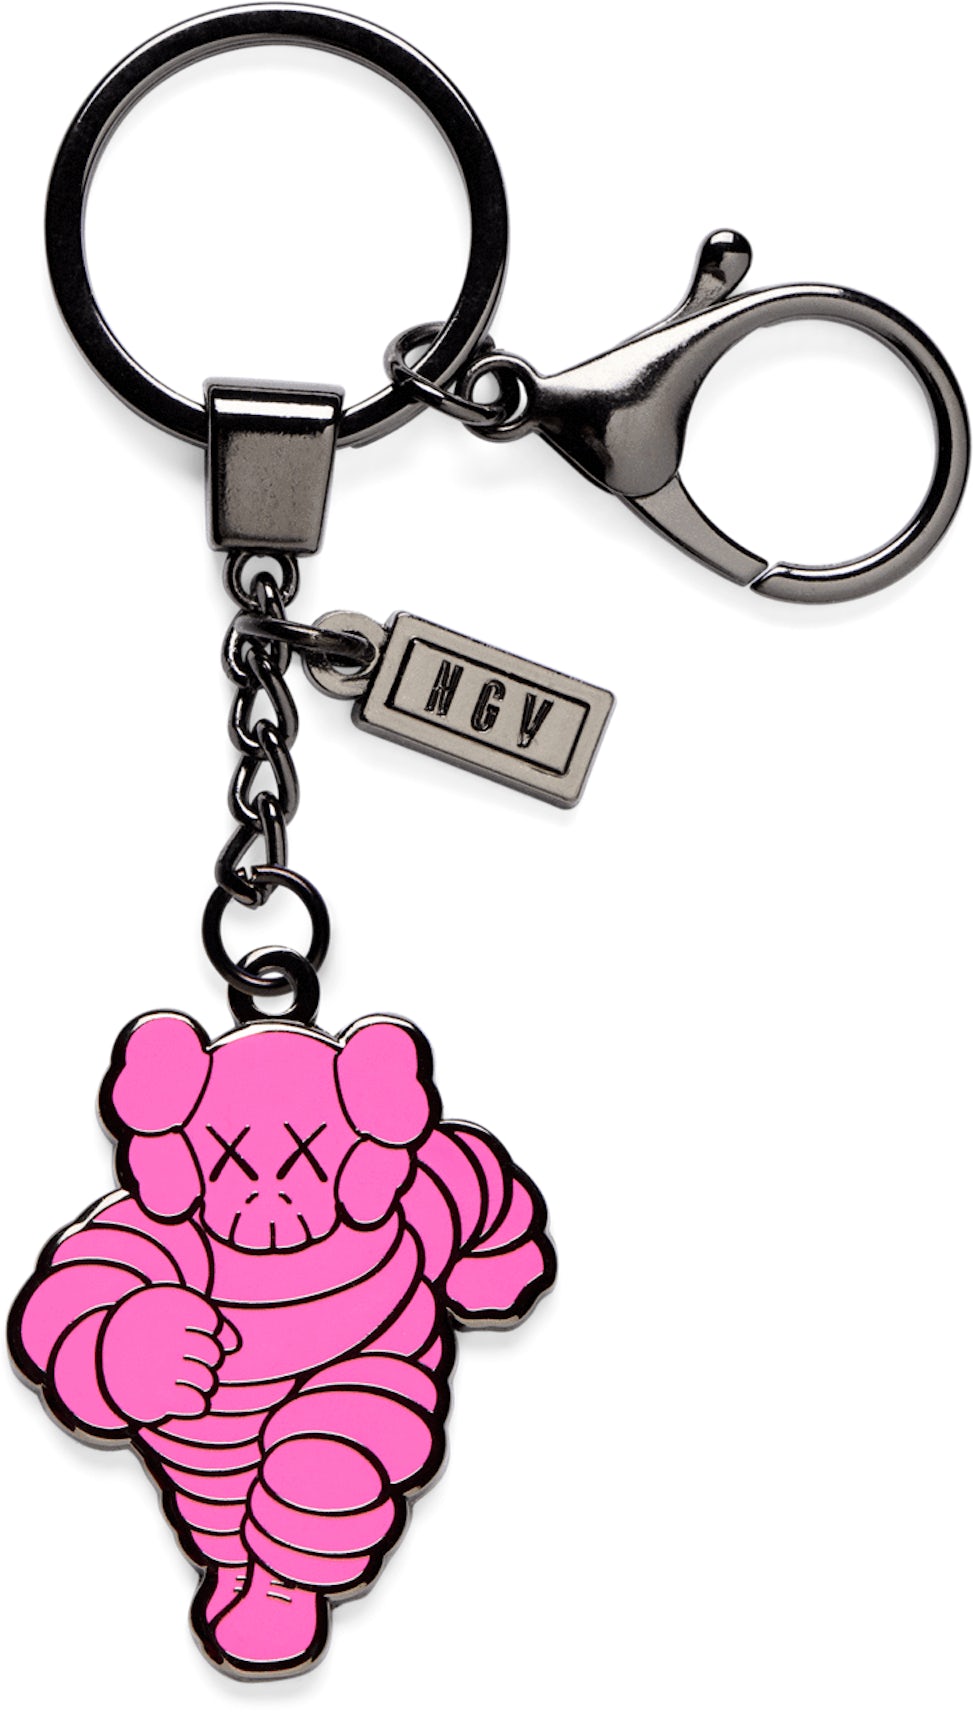 KAWS Chum Keychain Pink - US